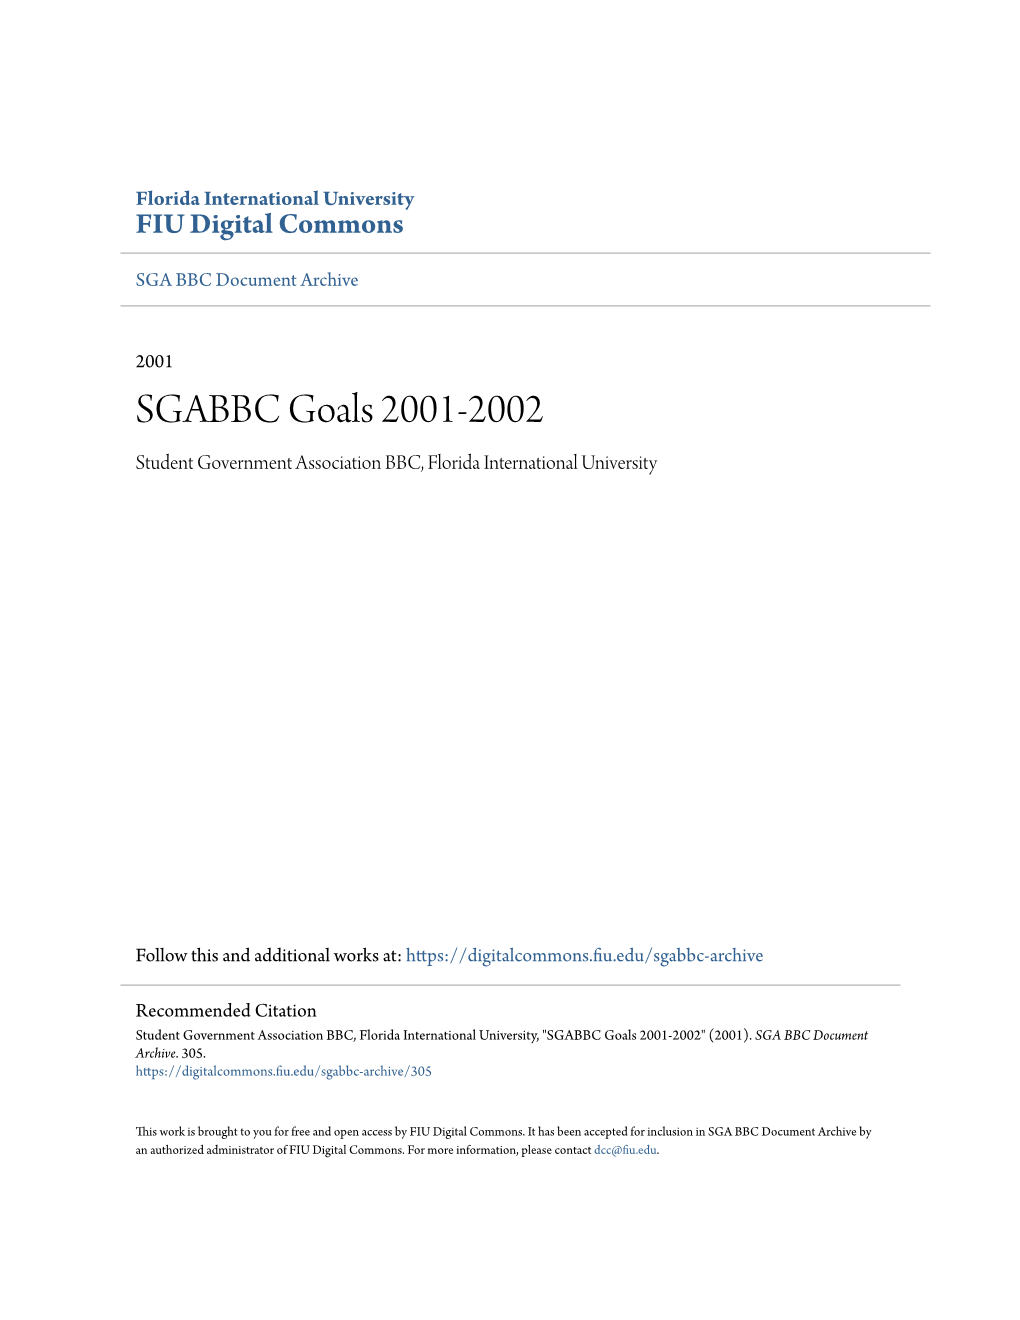 SGABBC Goals 2001-2002 Student Government Association BBC, Florida International University